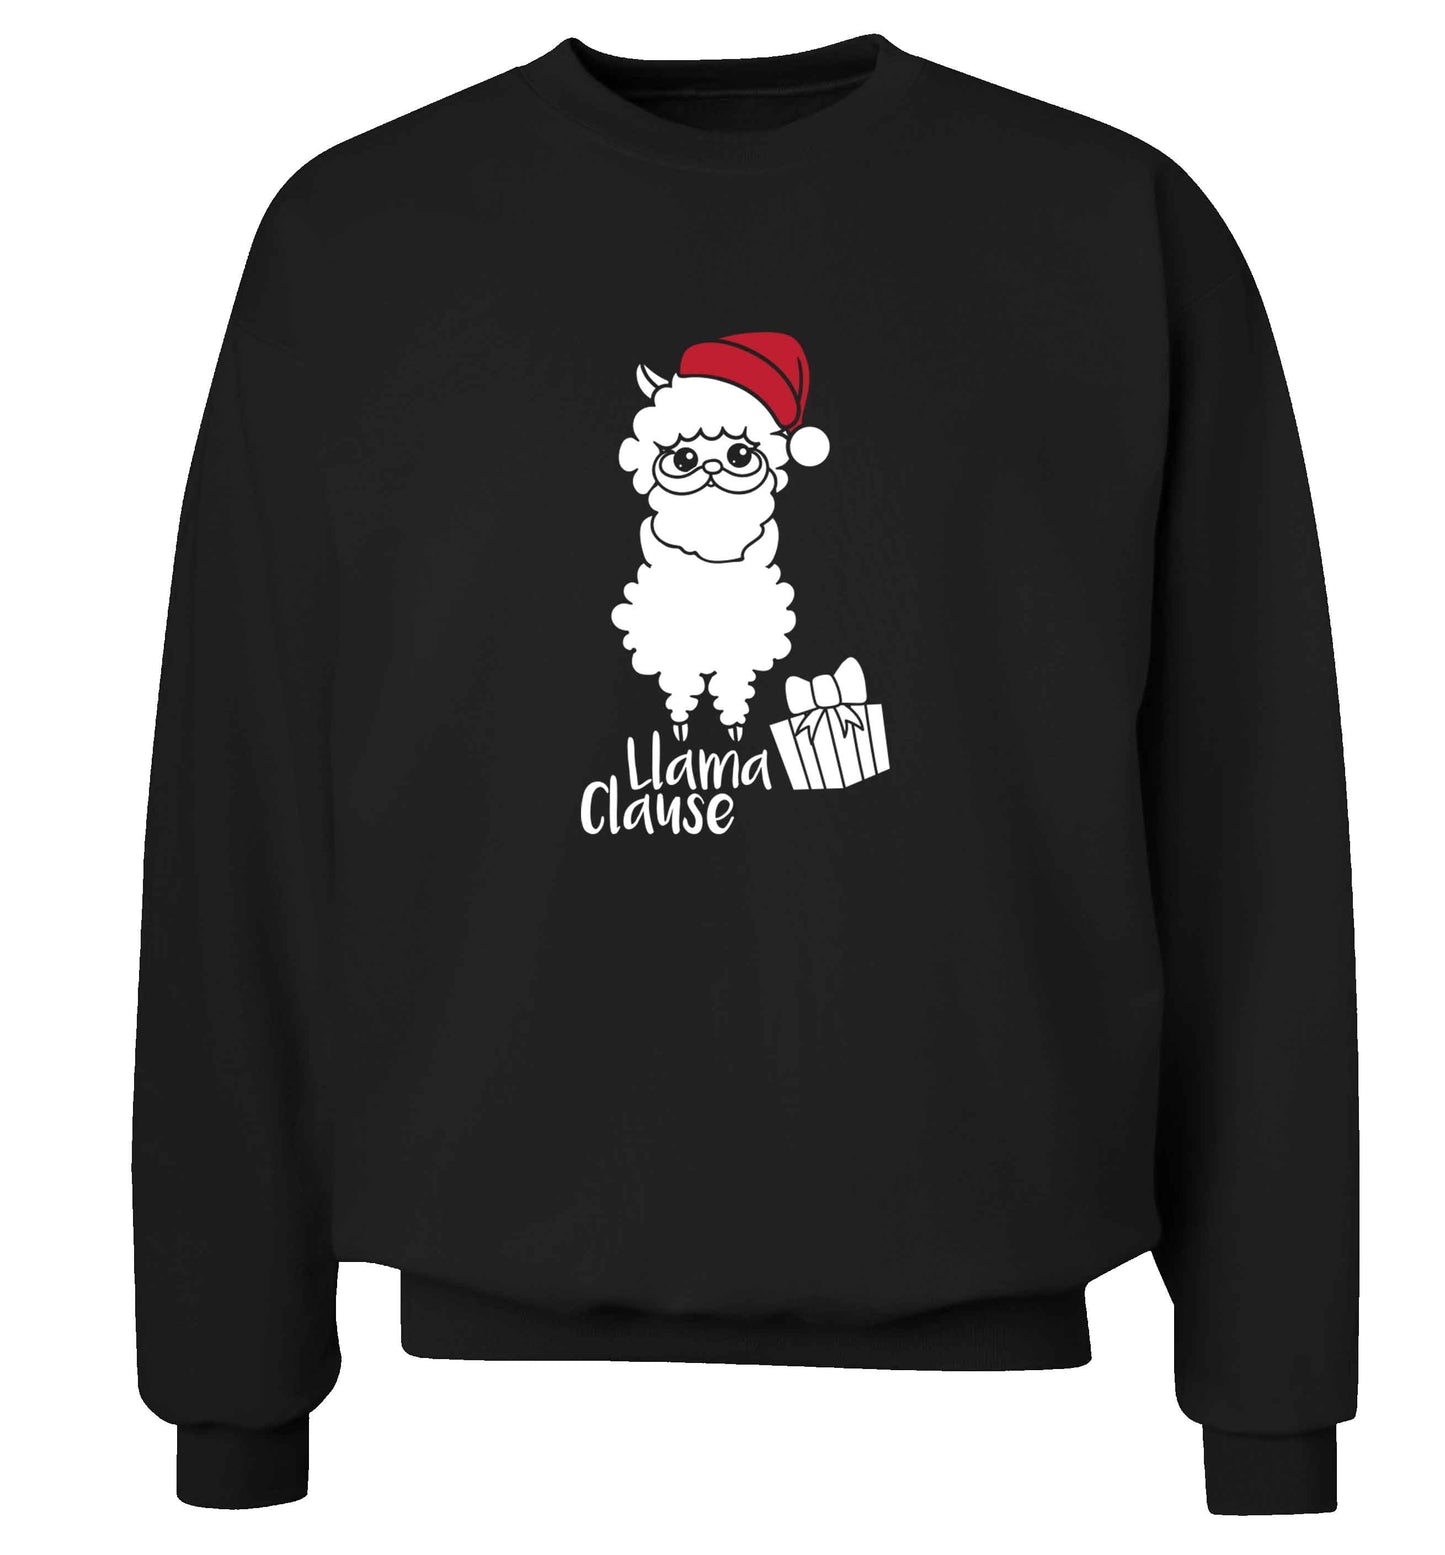 Llama Clause adult's unisex black sweater 2XL